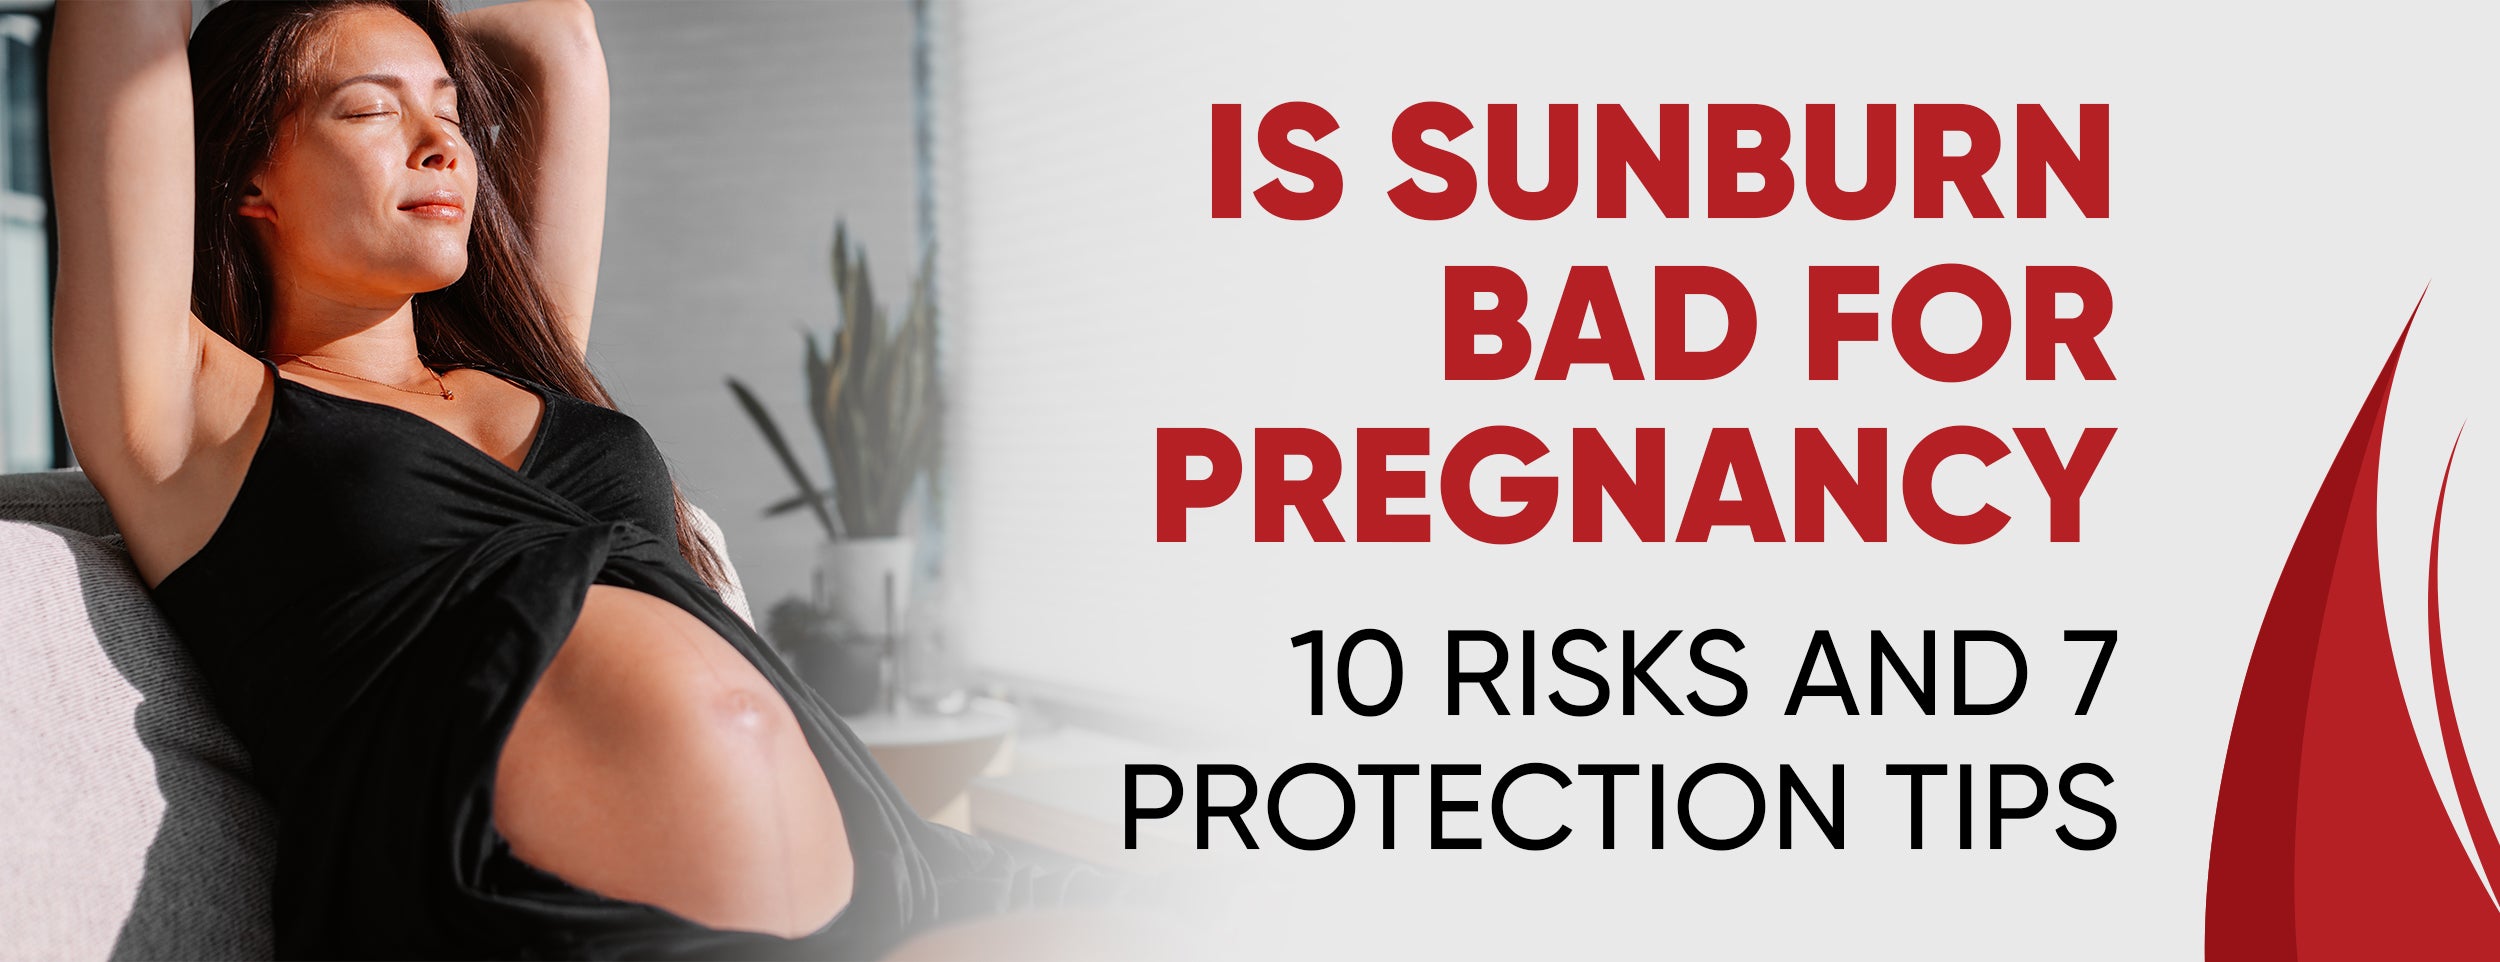 10 Risks & Effects of Sunburn During Pregnancy [7 Tips]